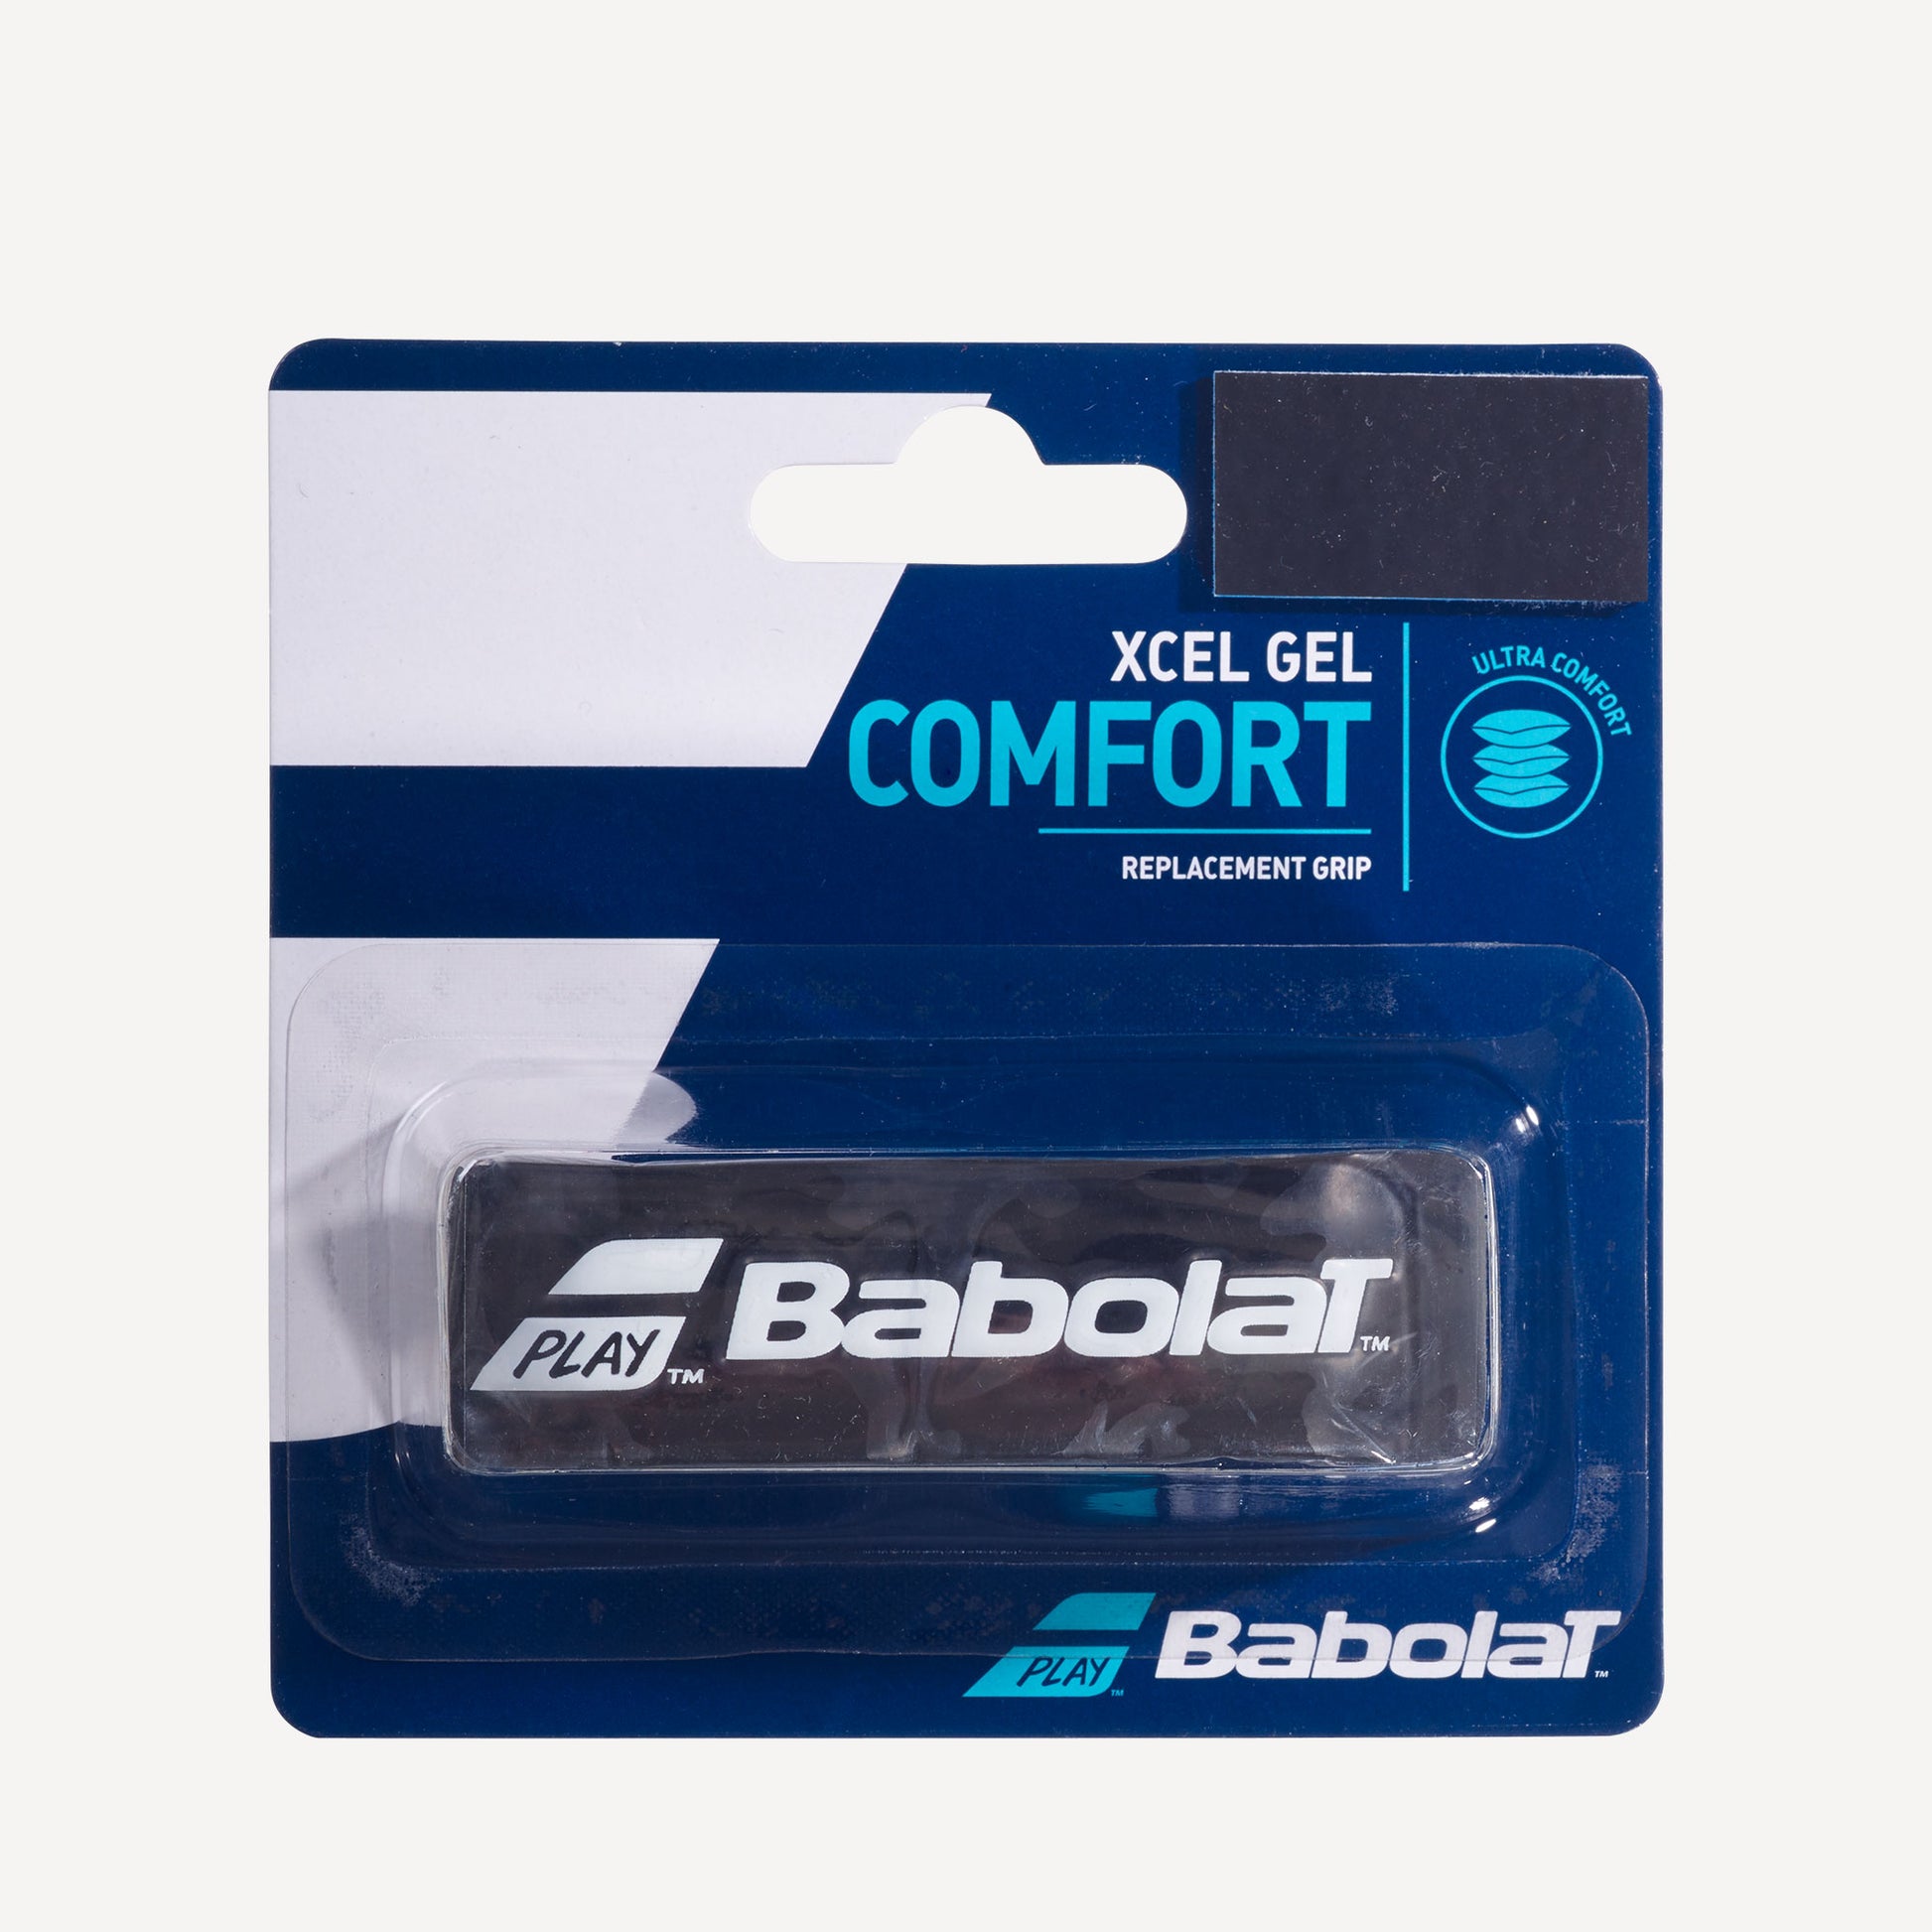 Babolat Xcel Gel Tennis Replacement Grip 1